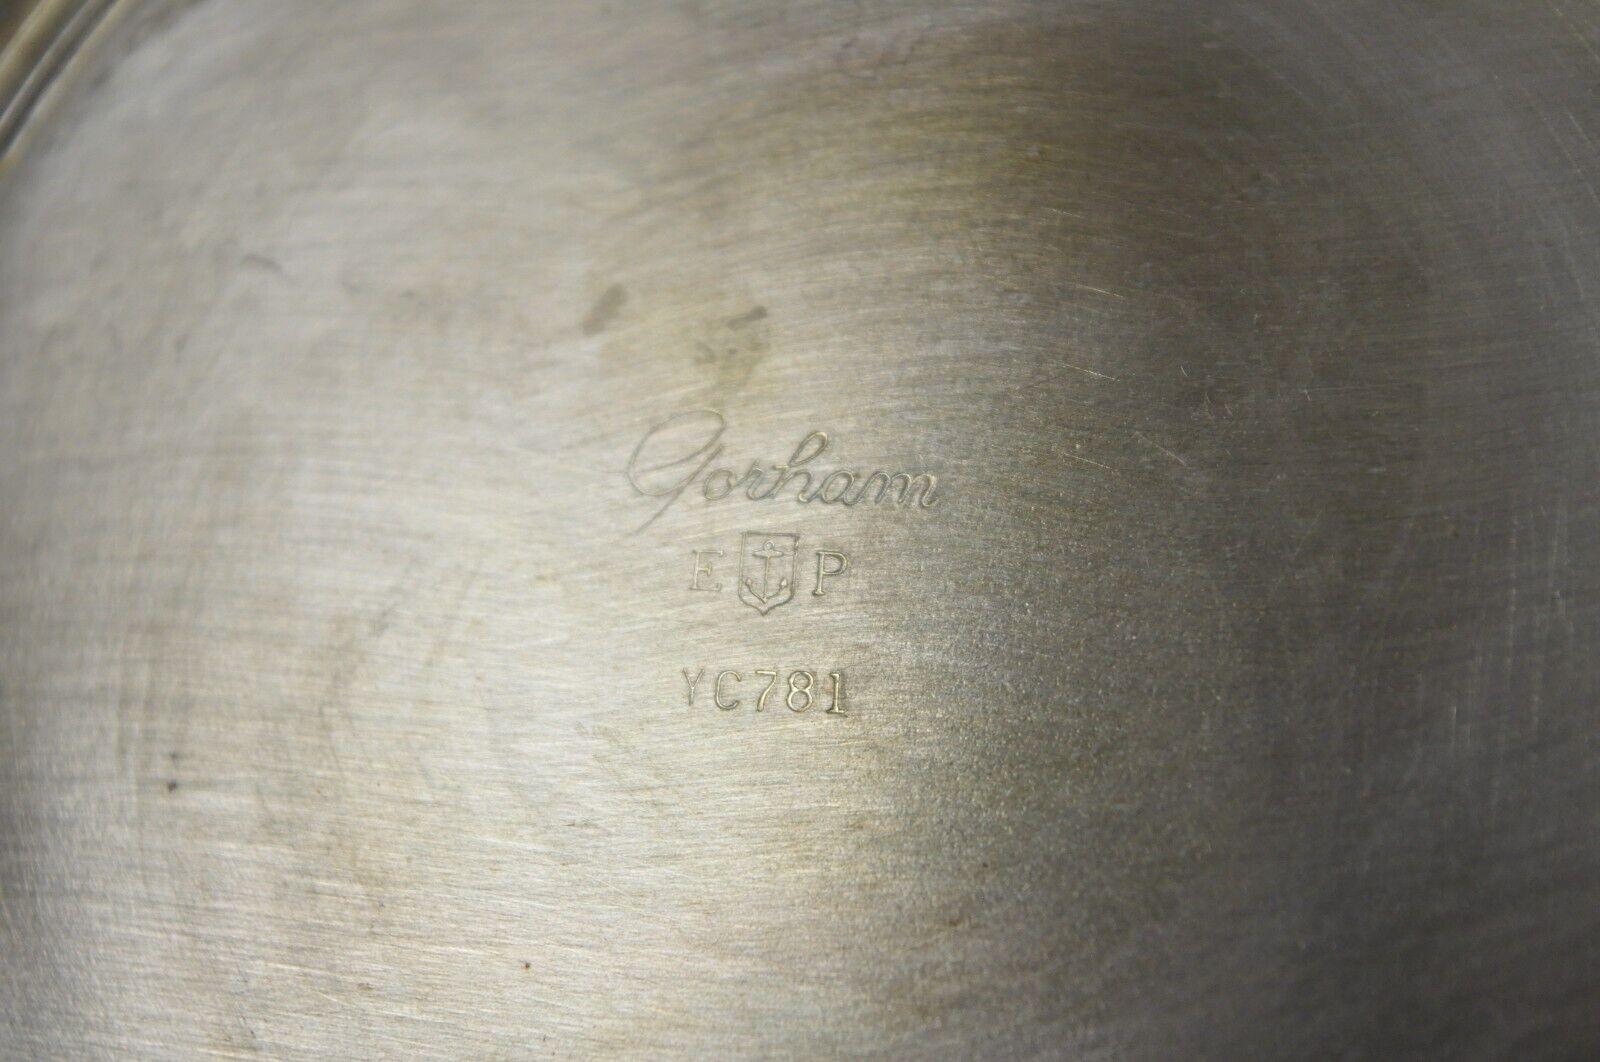 Gorham YC781 Azure Blue Enamel Silver Plated Round Modern Serving Bowl For Sale 2